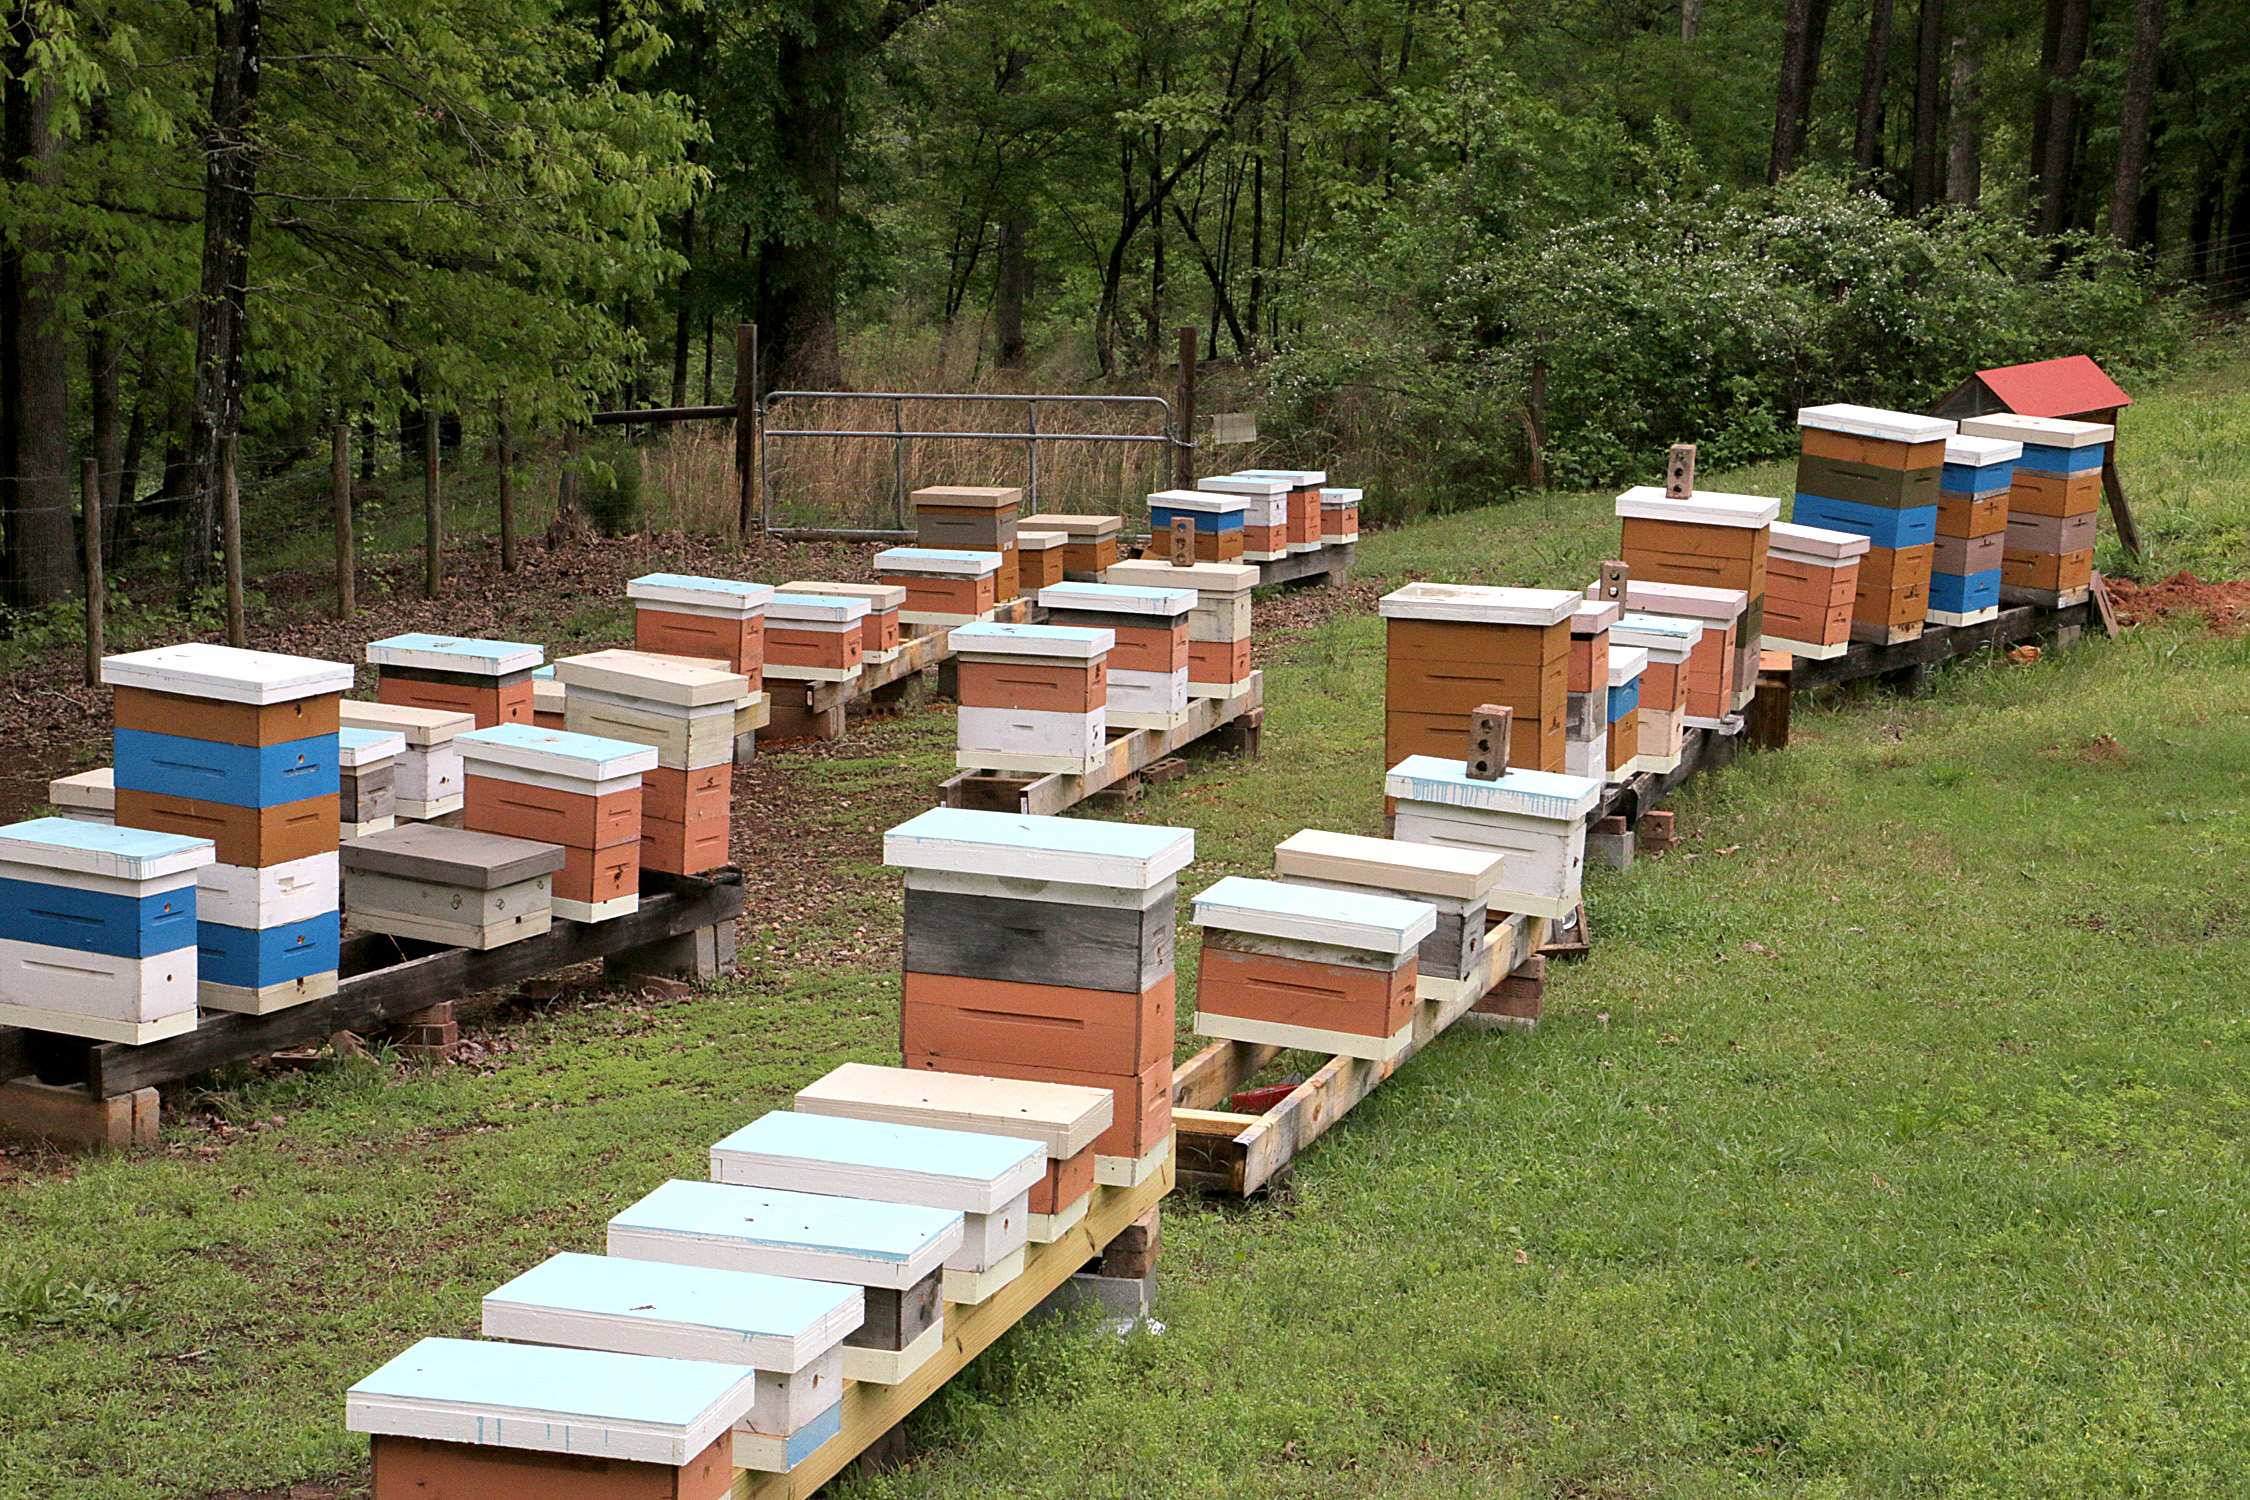 49 Top Images Backyard Bee Hive : DIY Beehive in a Jar - Fresh honey in your backyard! - Mrs ...